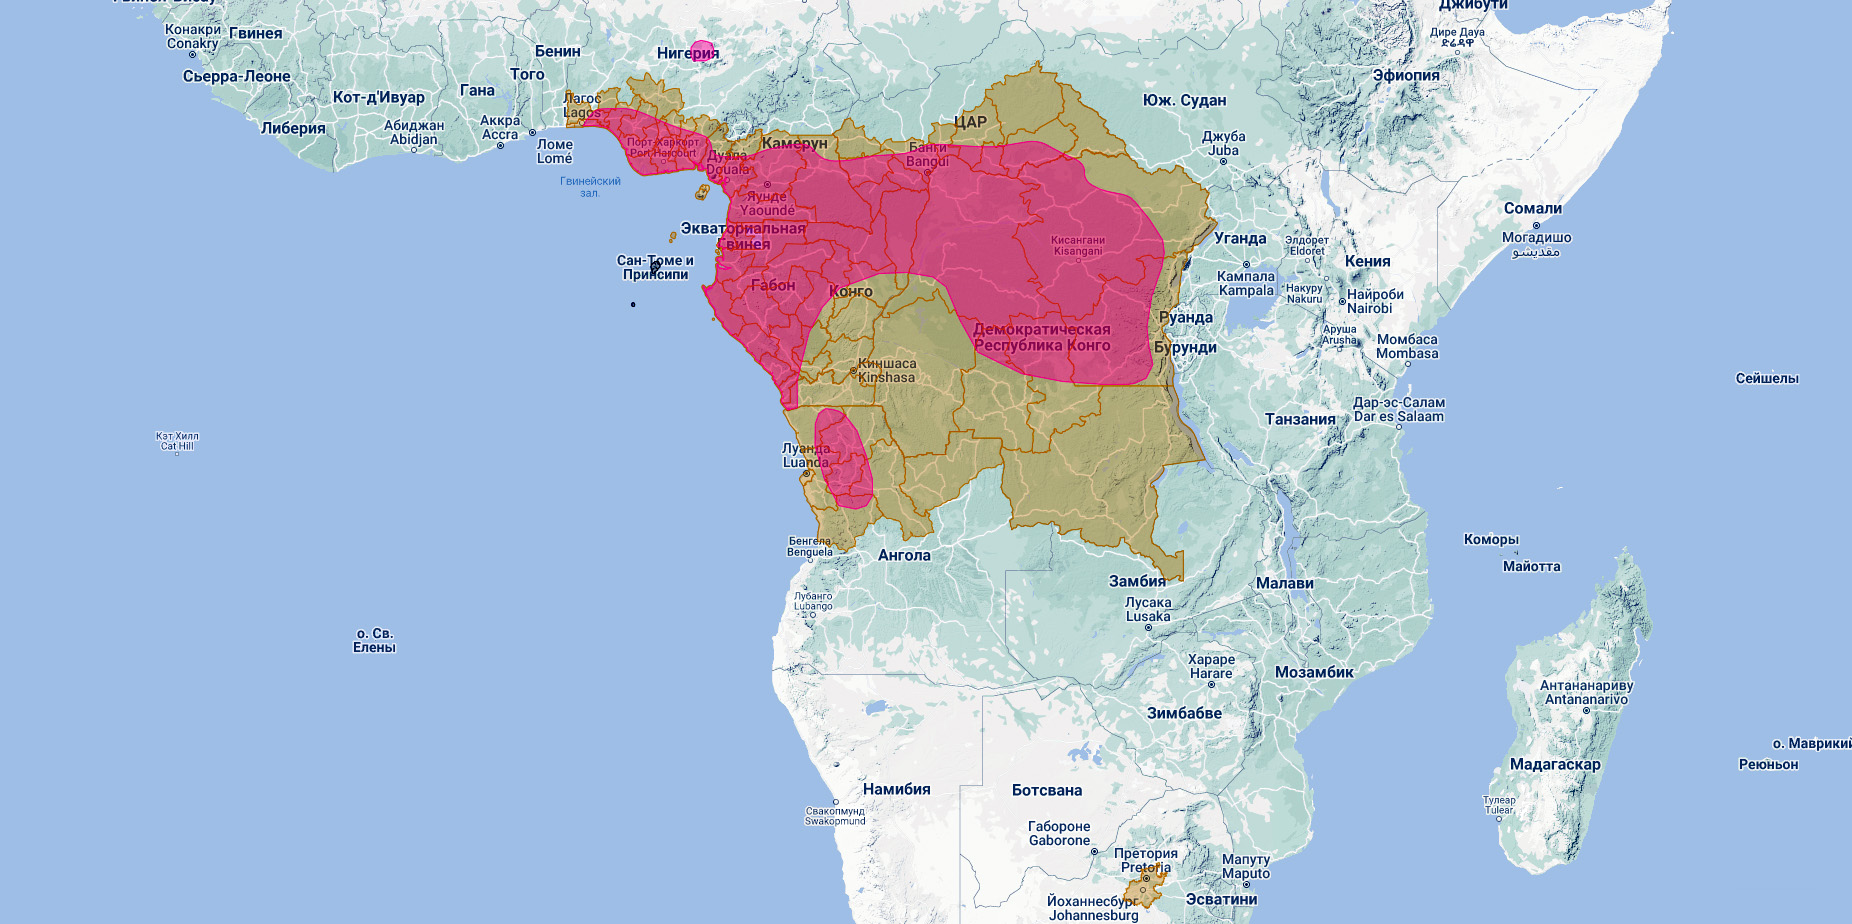 Каштановобрюхий ястреб (Accipiter castanilius) Ареал обитания на карте